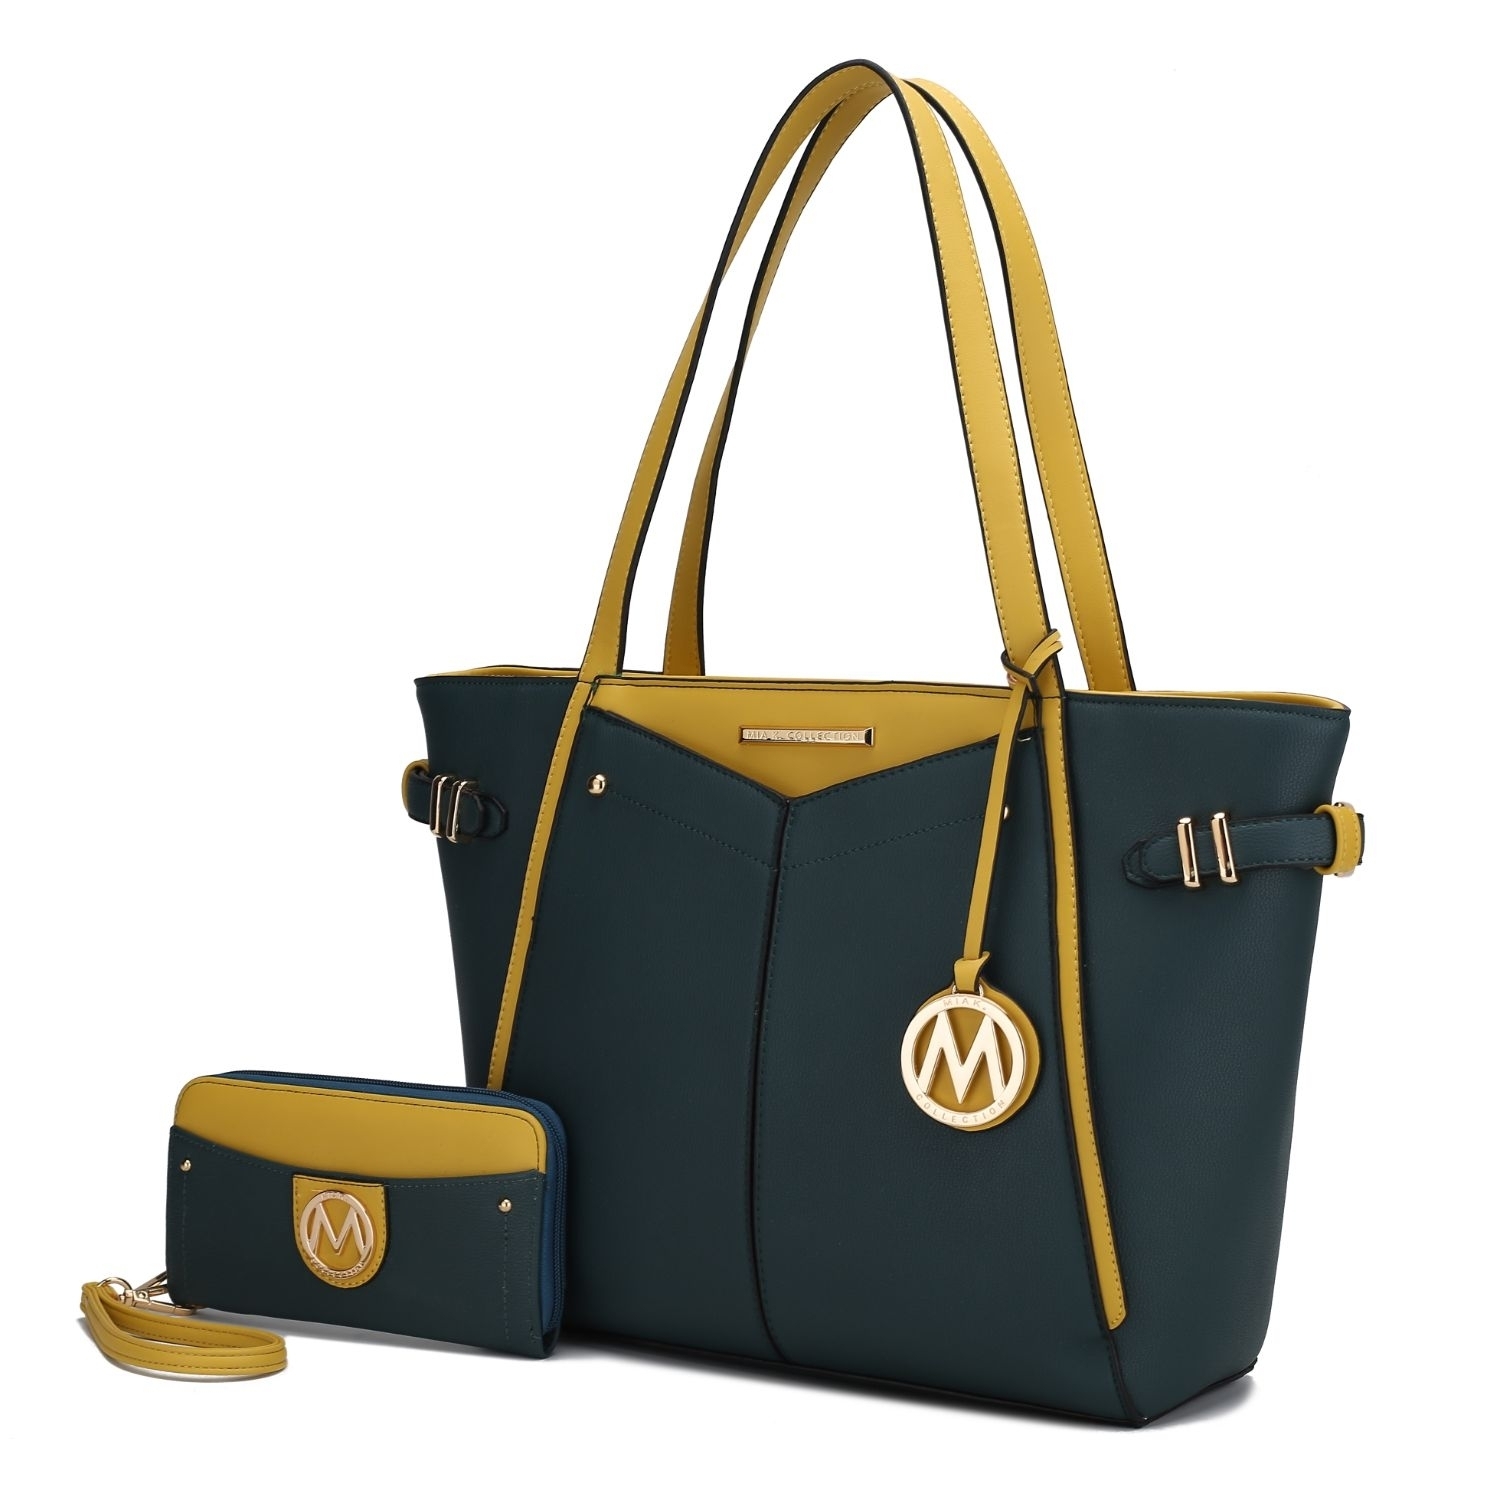 MKF Collection Morgan Tote Handbag By Mia K. - Teal Yellow